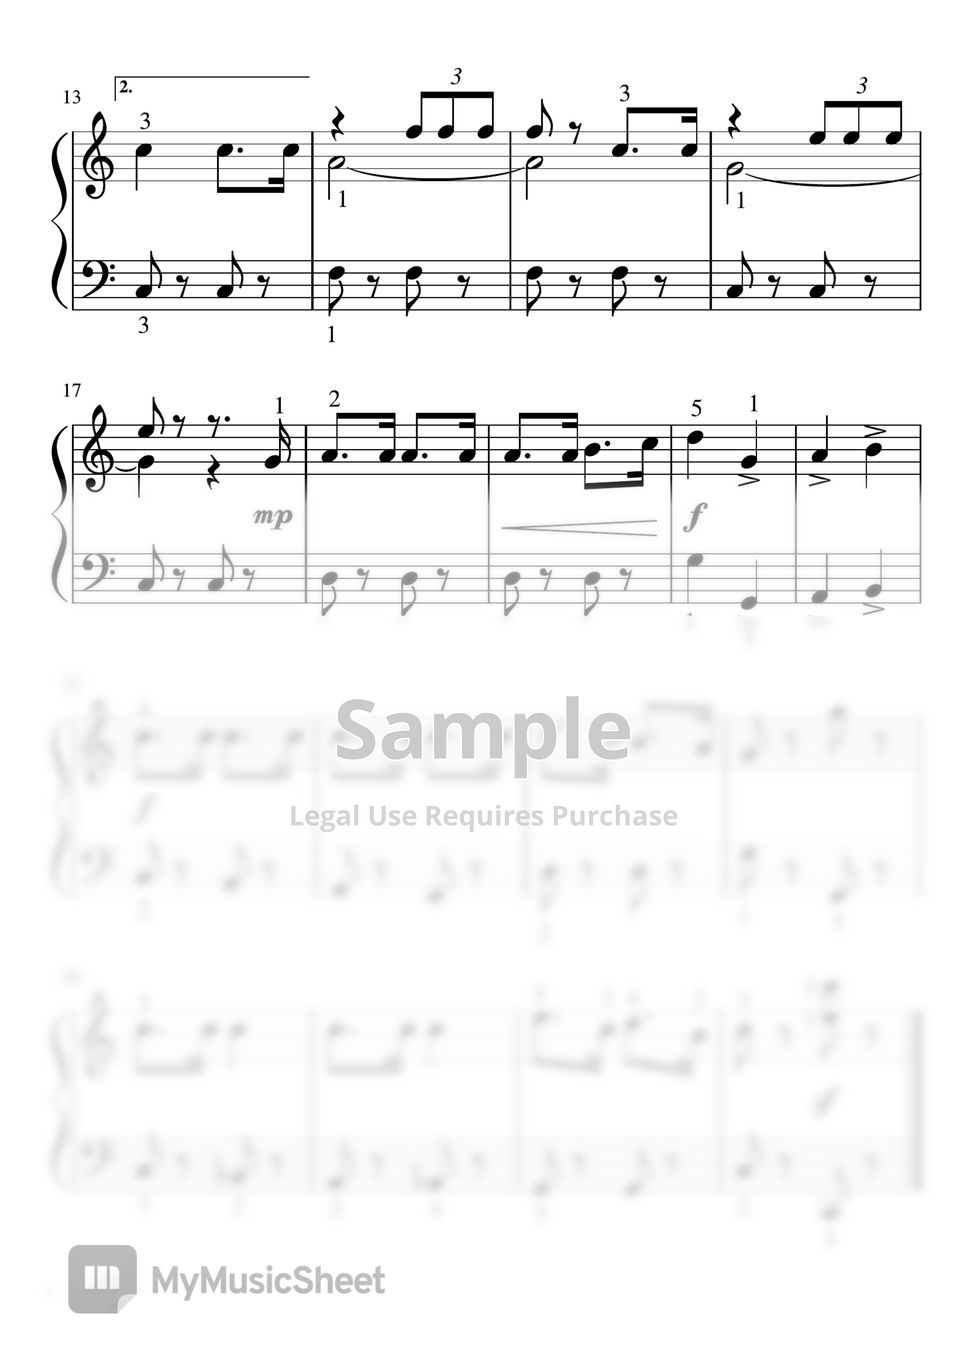 Jimmie Dodd - Mickey Mouse March (Cdur・Piano solo beginner) by pfkaori